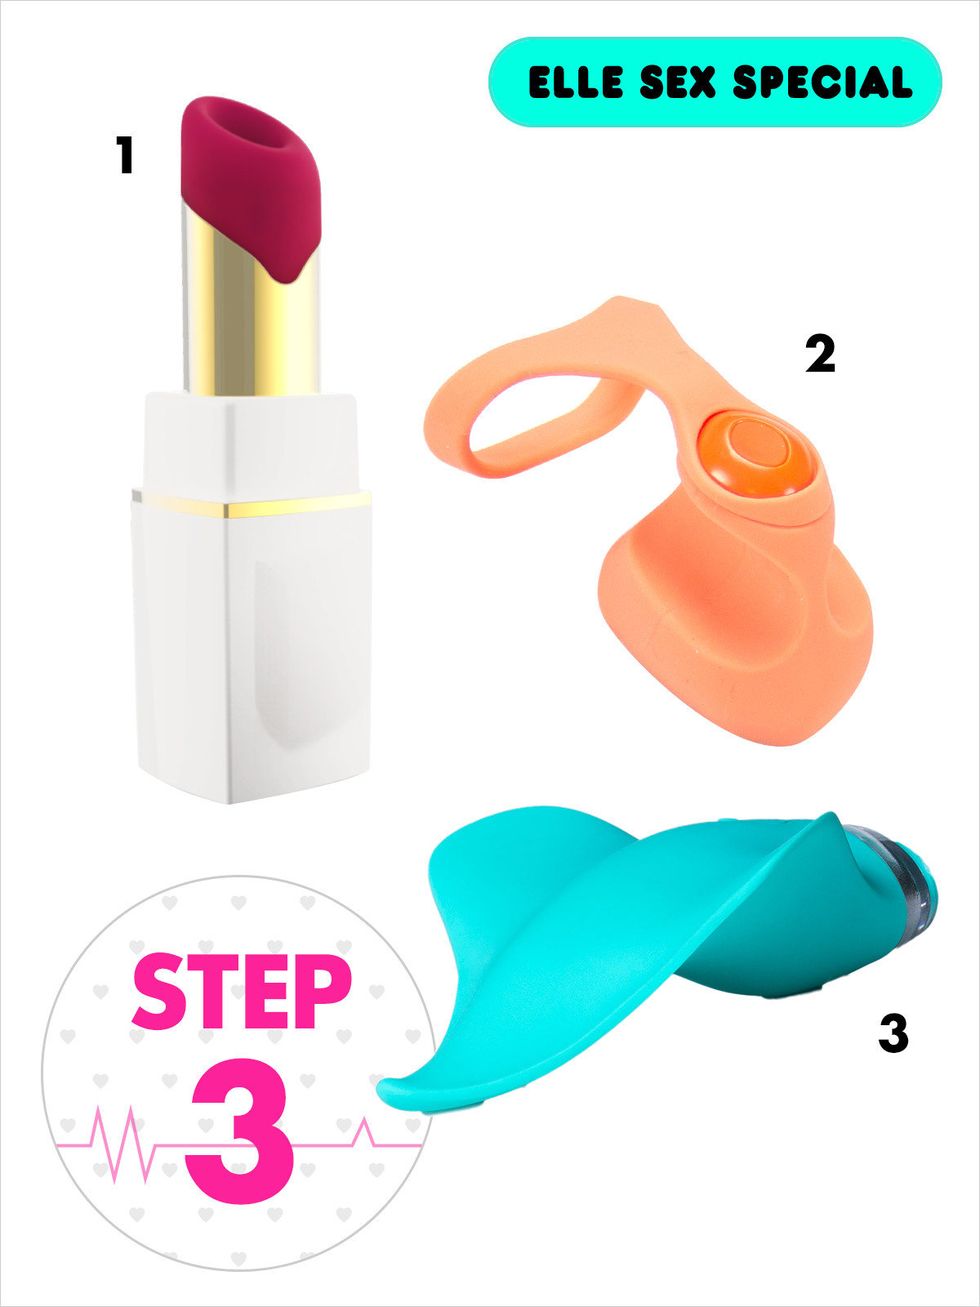 Clip art, Product, Nose, Plastic bottle, Graphics, Lipstick, Illustration, 